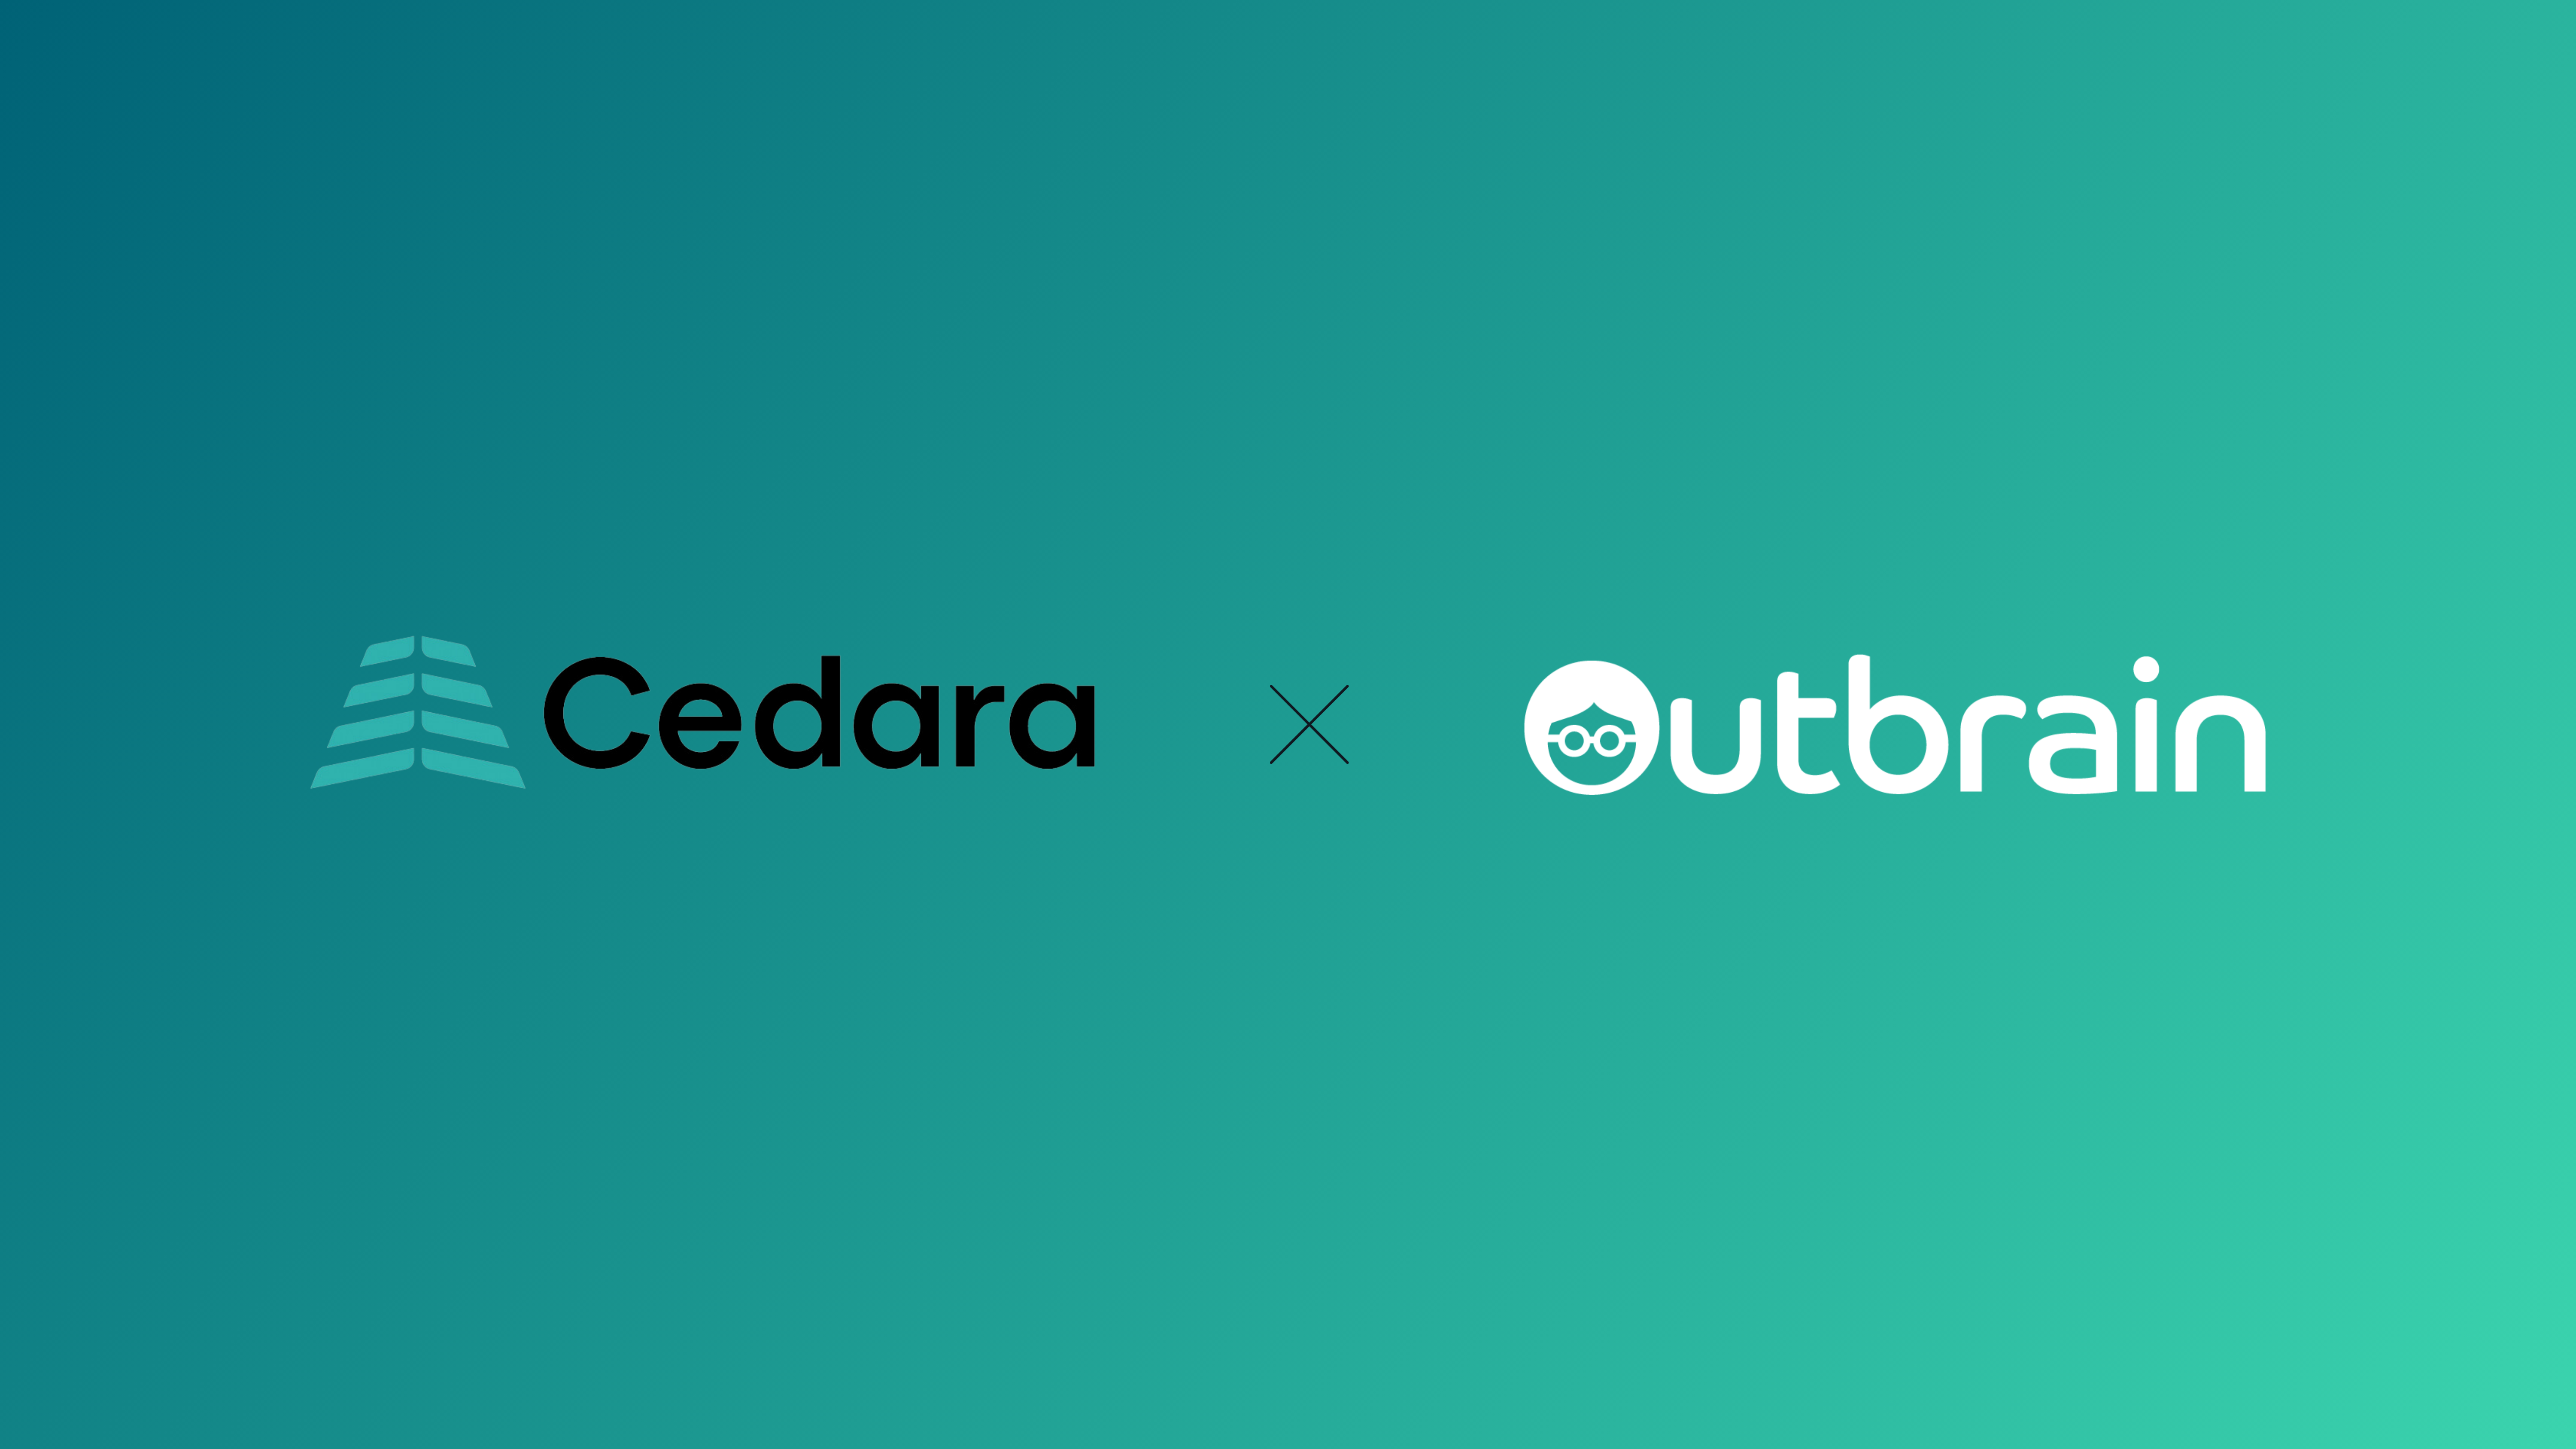 Outbrain、Cedara社との提携及びAI スマートスロットリングツールの提供開始により、持続可能性と脱炭素化への取り組みを加速